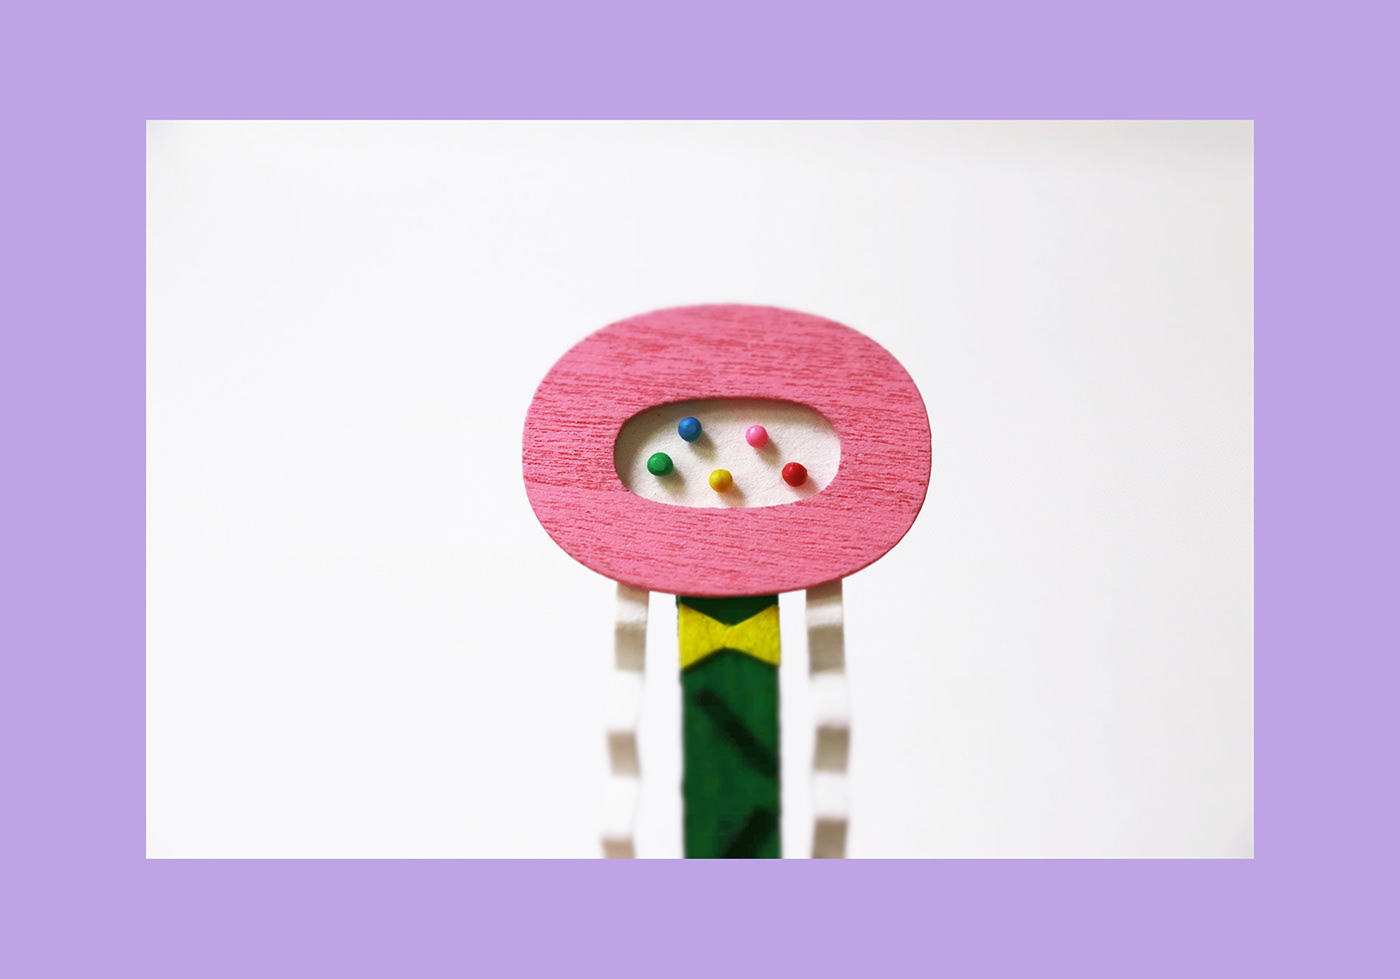 acrylic artcraft craft figures paperart toy wood